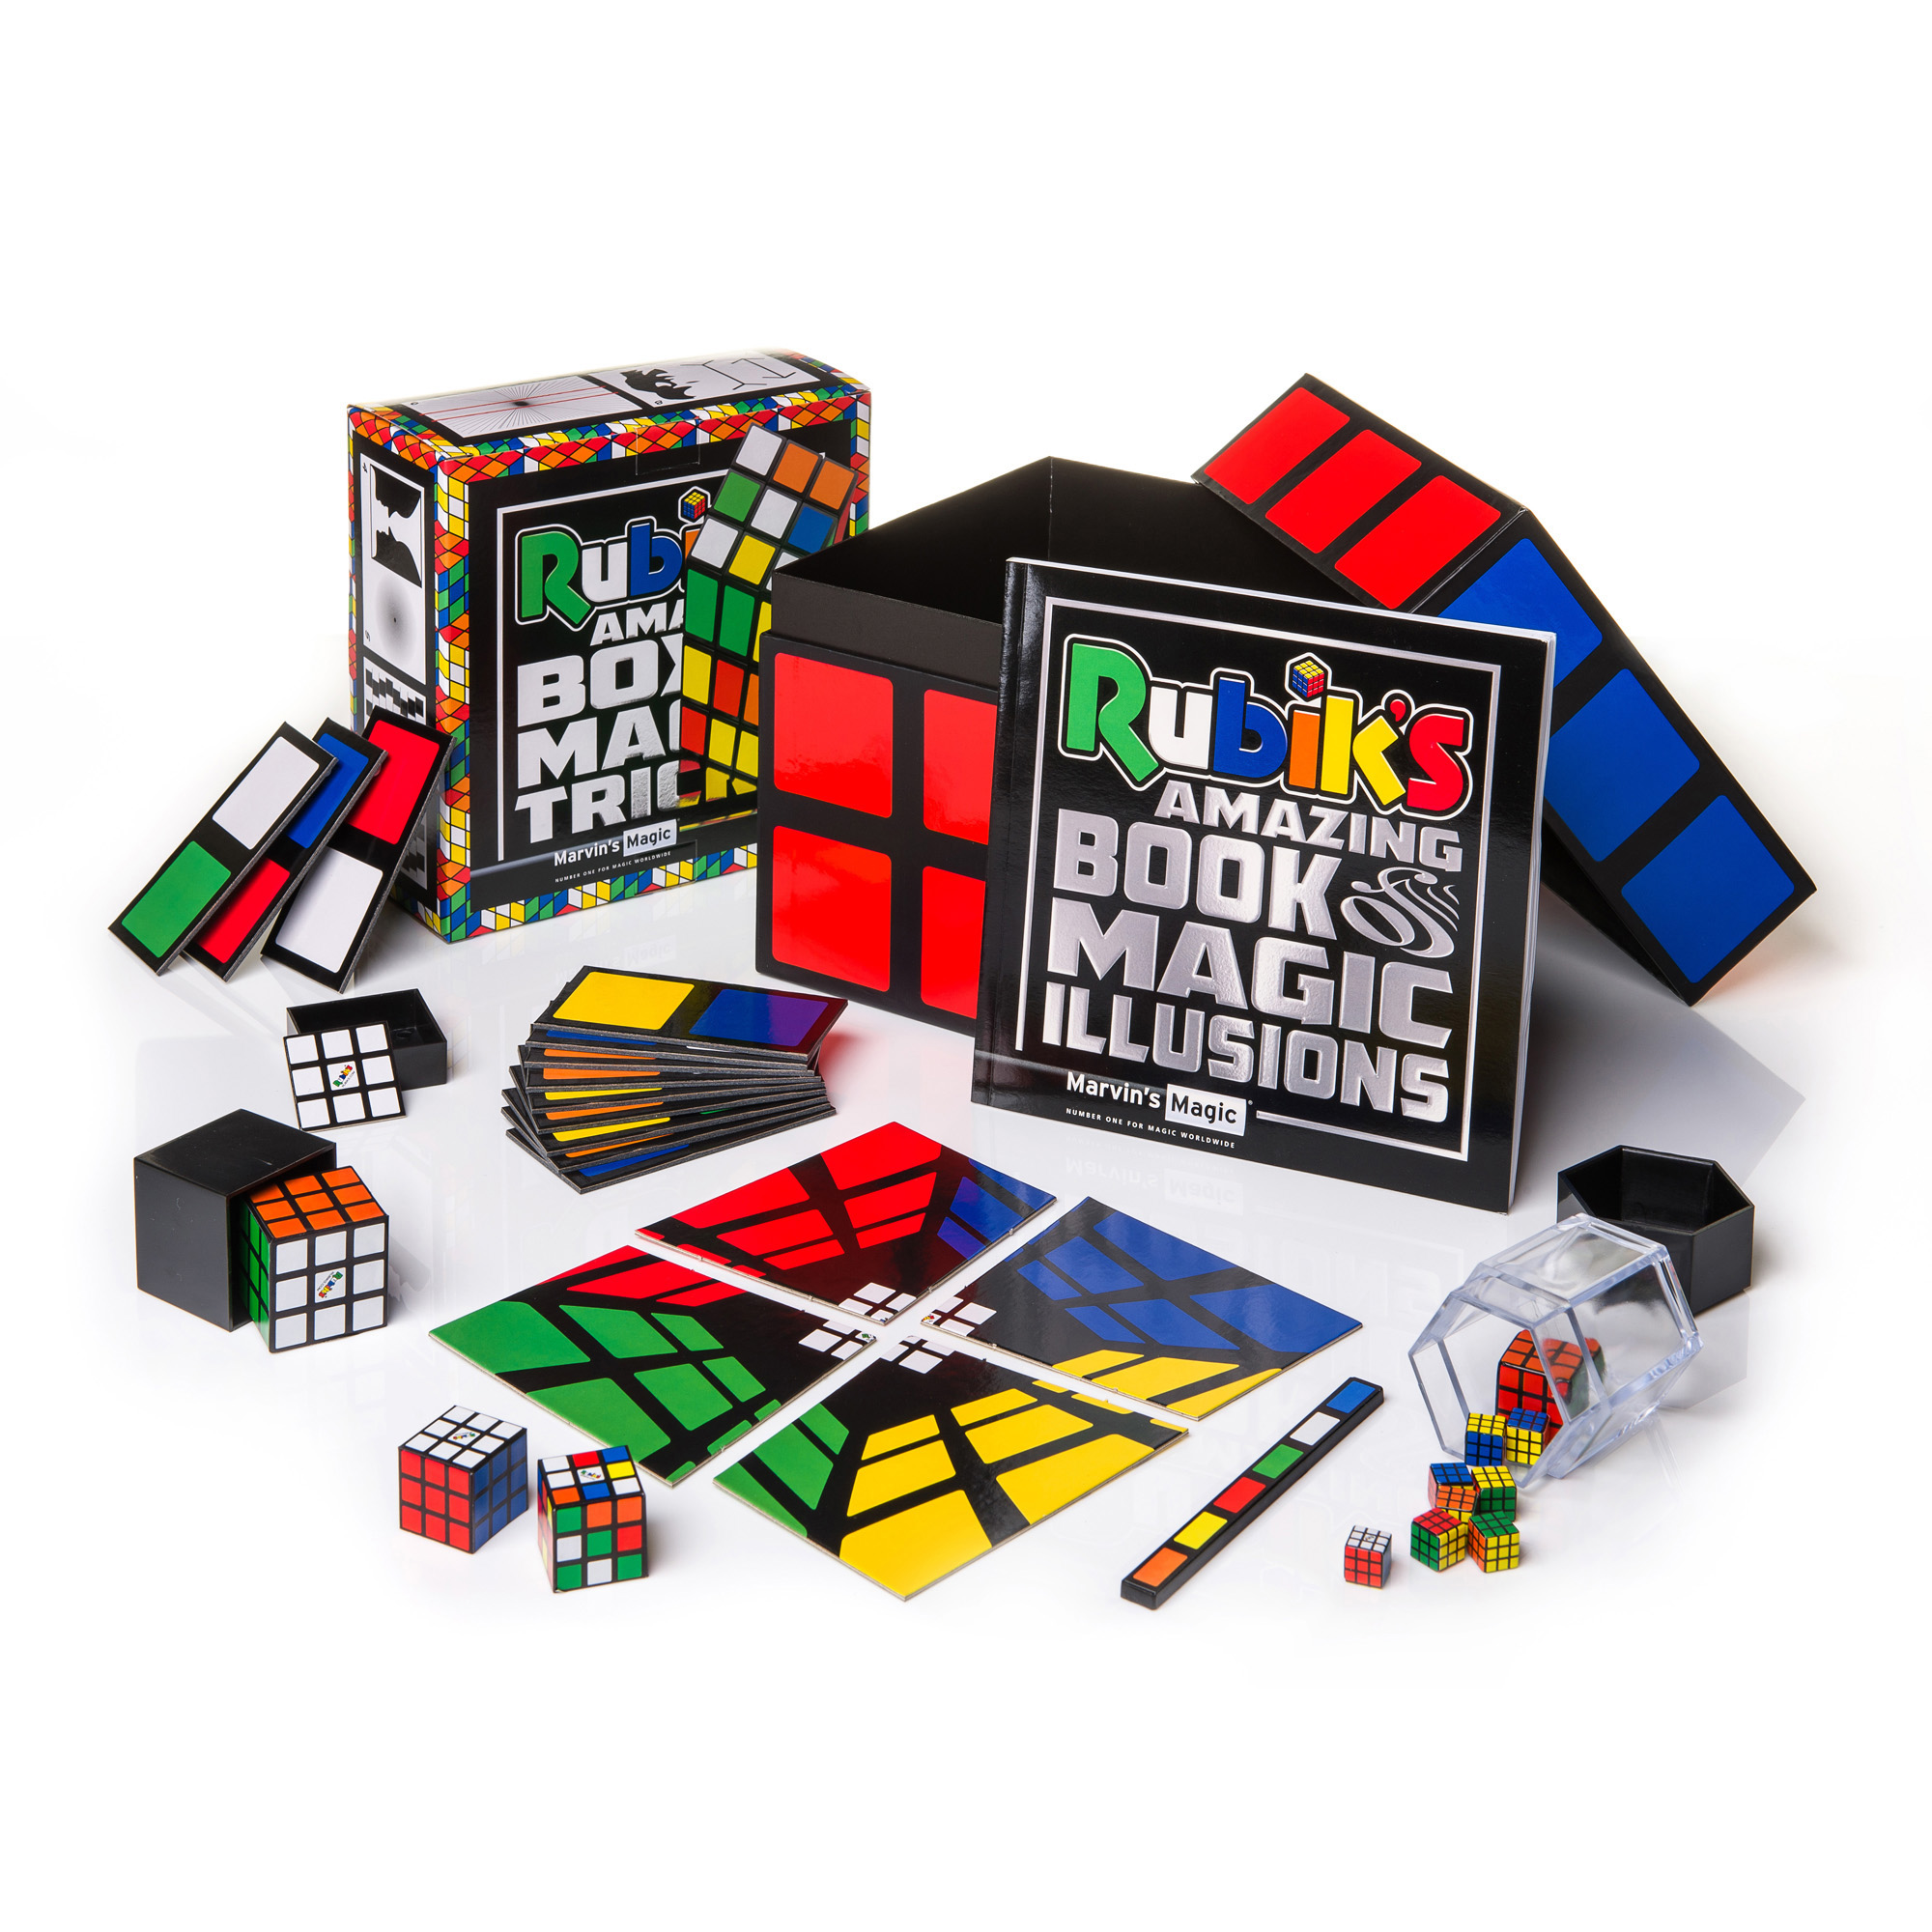 Box trucchi di magia del Cubo di Rubik - Marvin's Magic